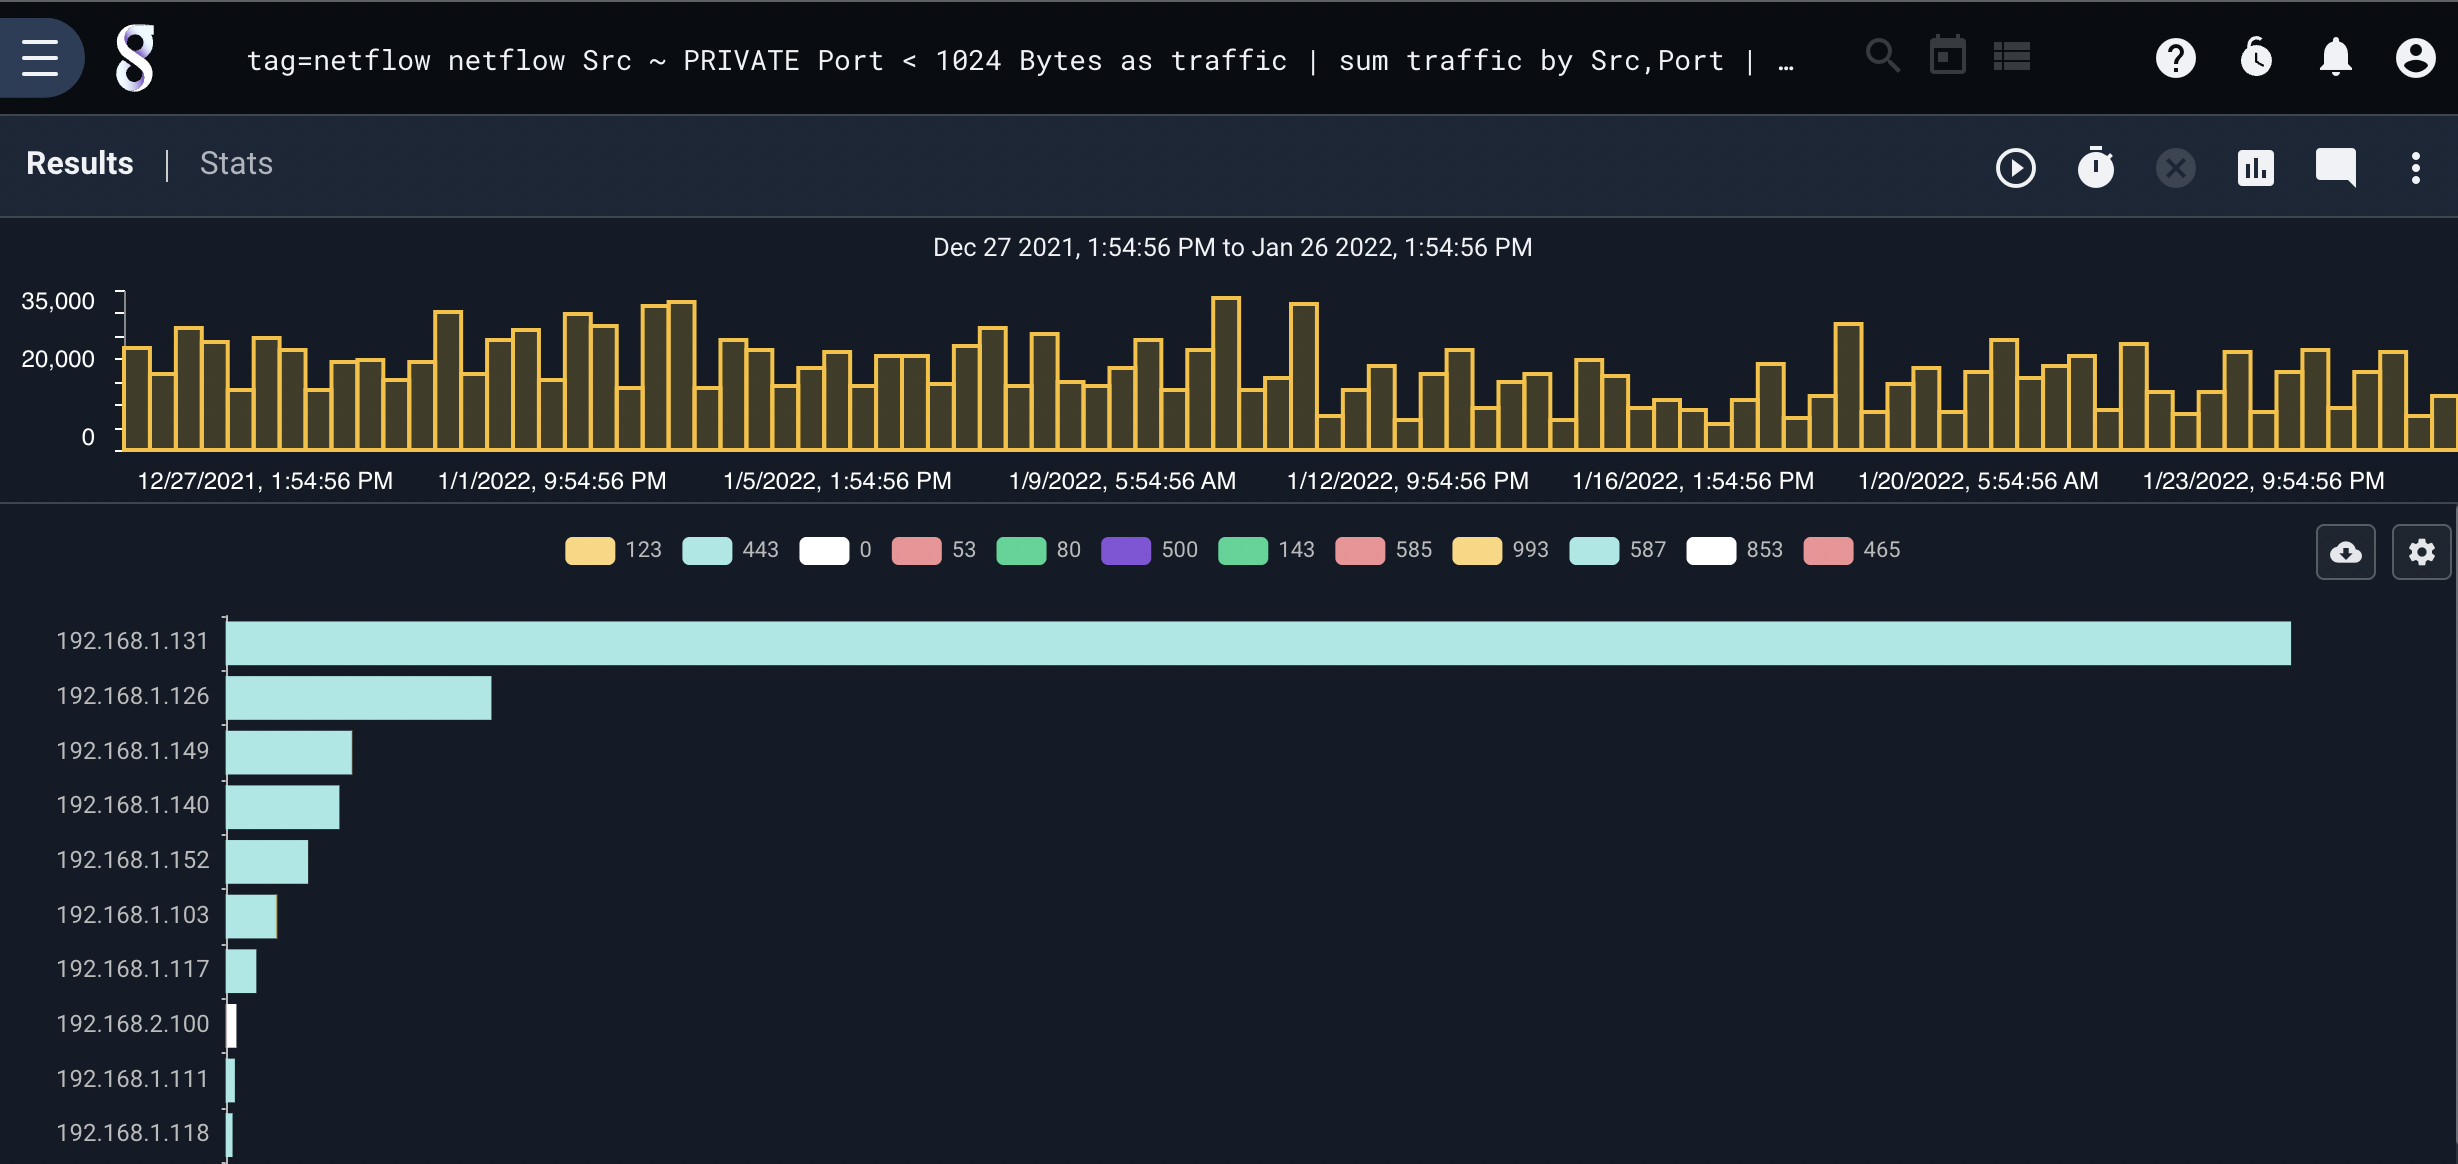 IP Port Traffic Volumes